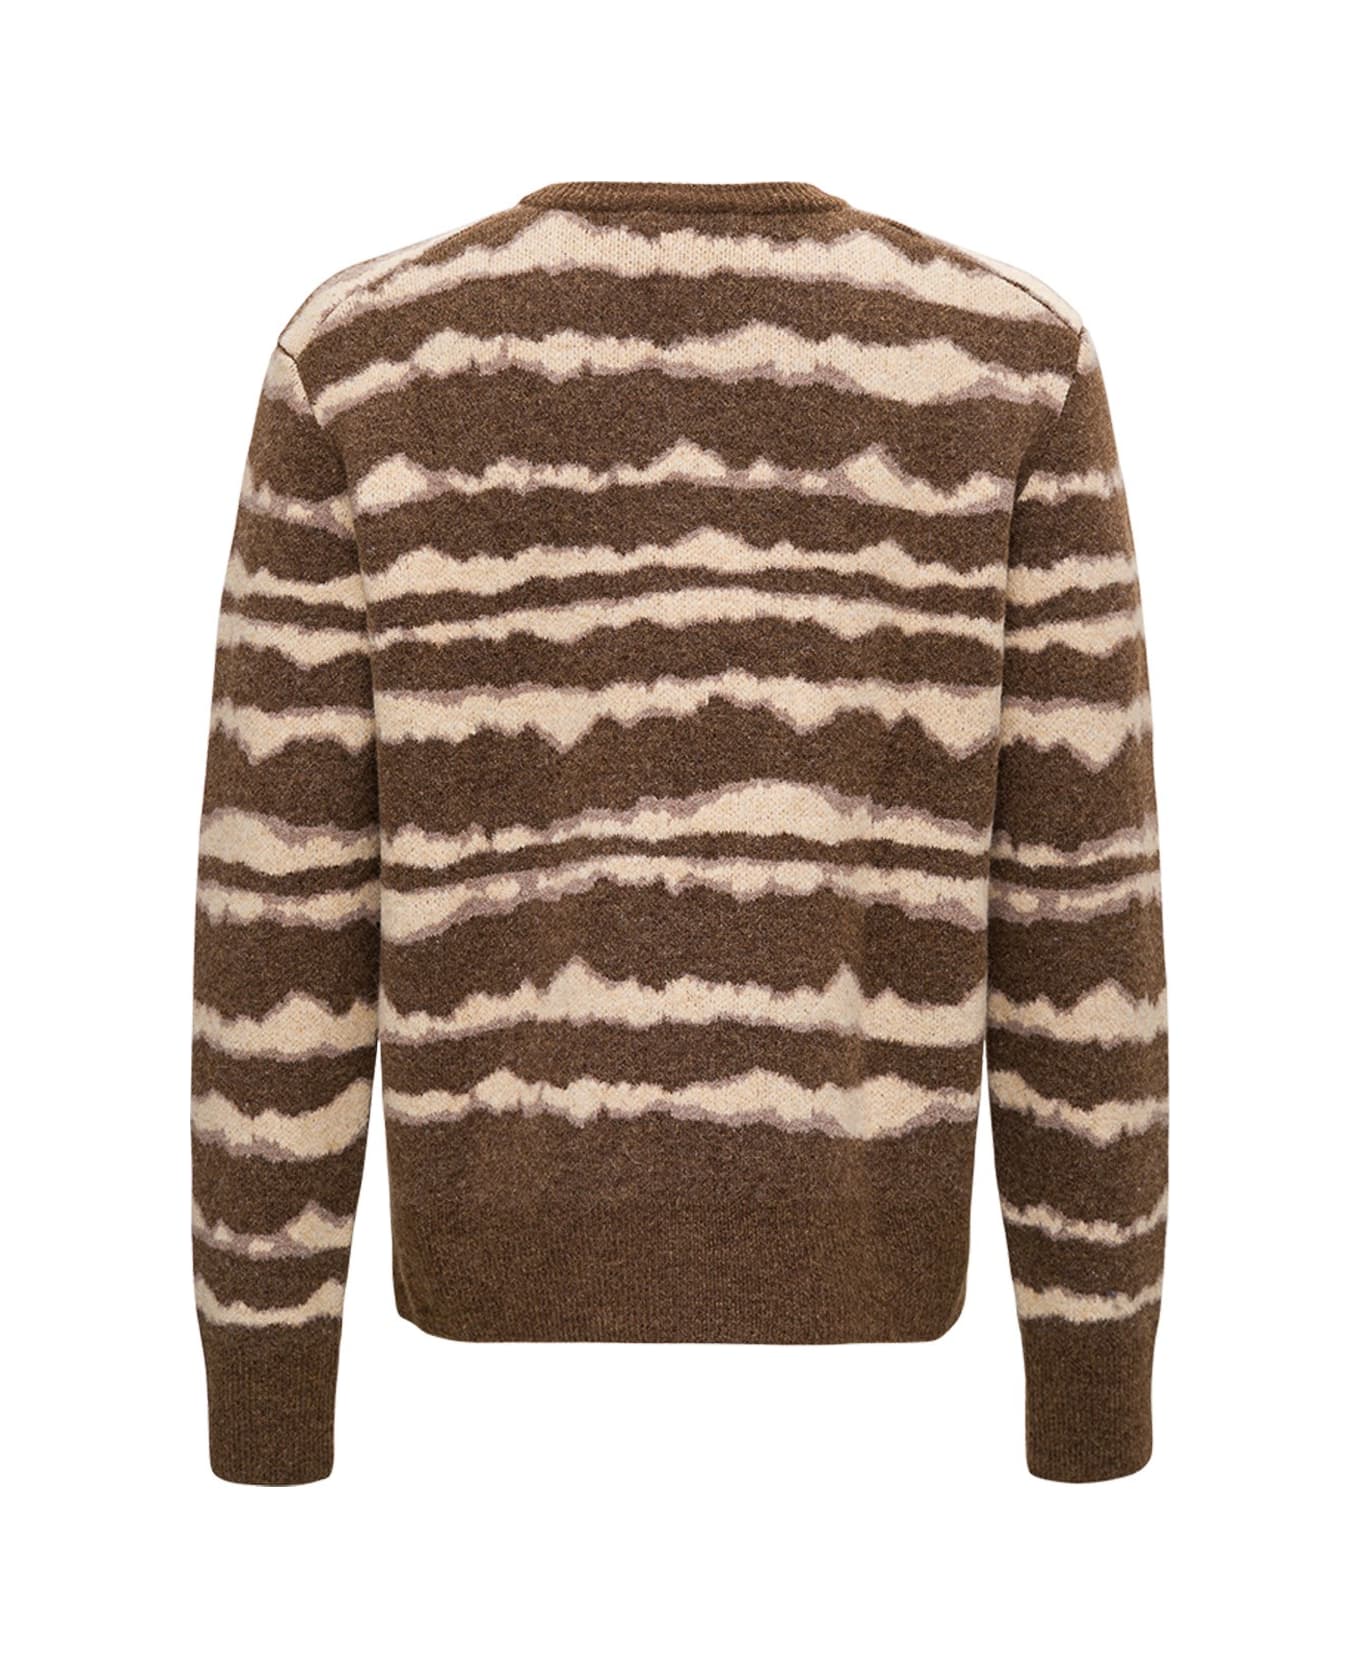 Nanushka Tie Dye Wool Blend Sweater - Brown